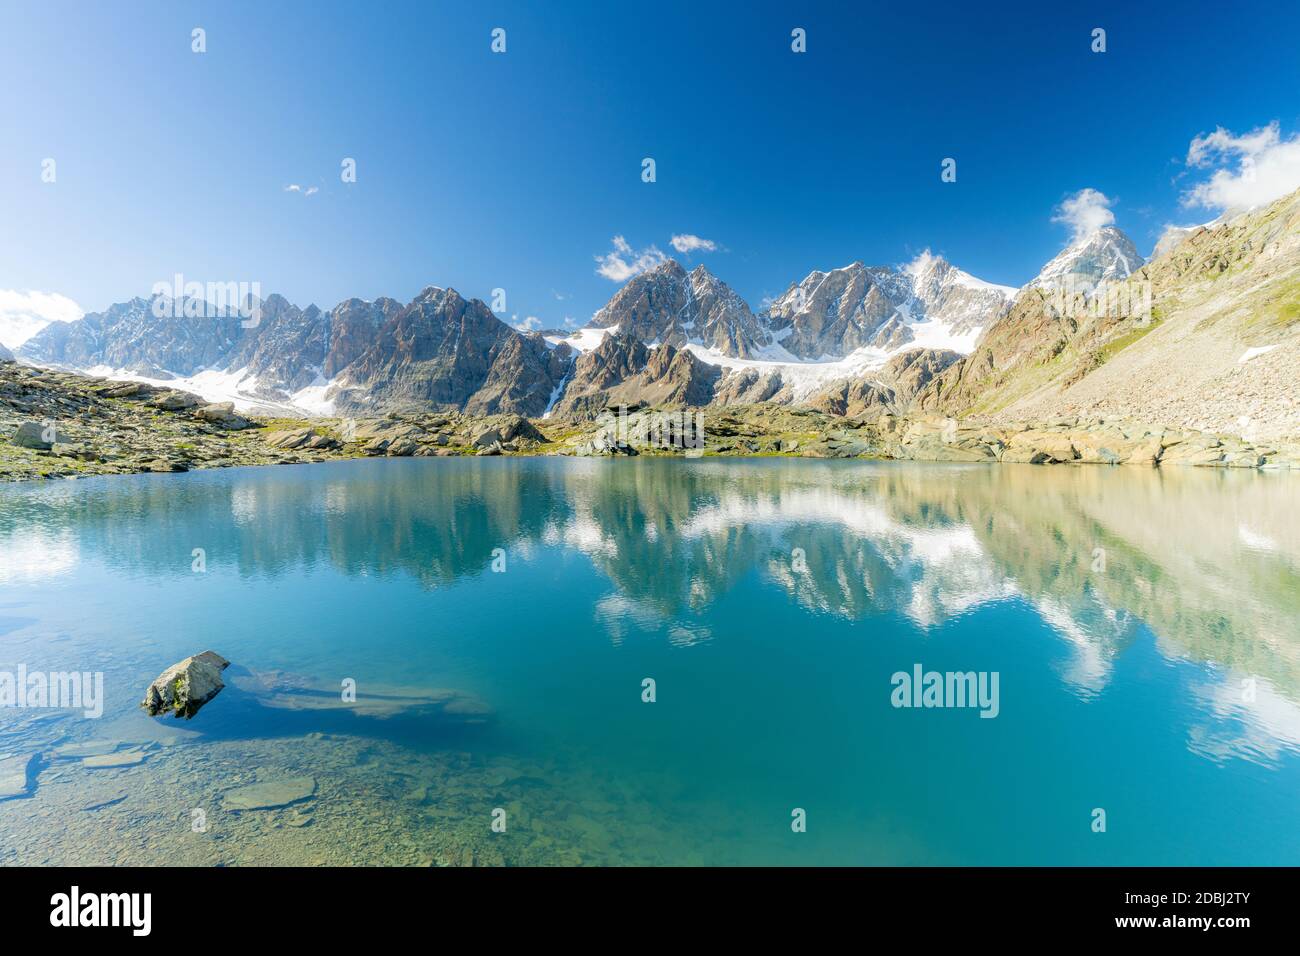 Bernina Group mountains mirrored in the clear water of Forbici lake, Valmalenco, Valtellina, Sondrio province, Lombardy, Italy, Europe Stock Photo